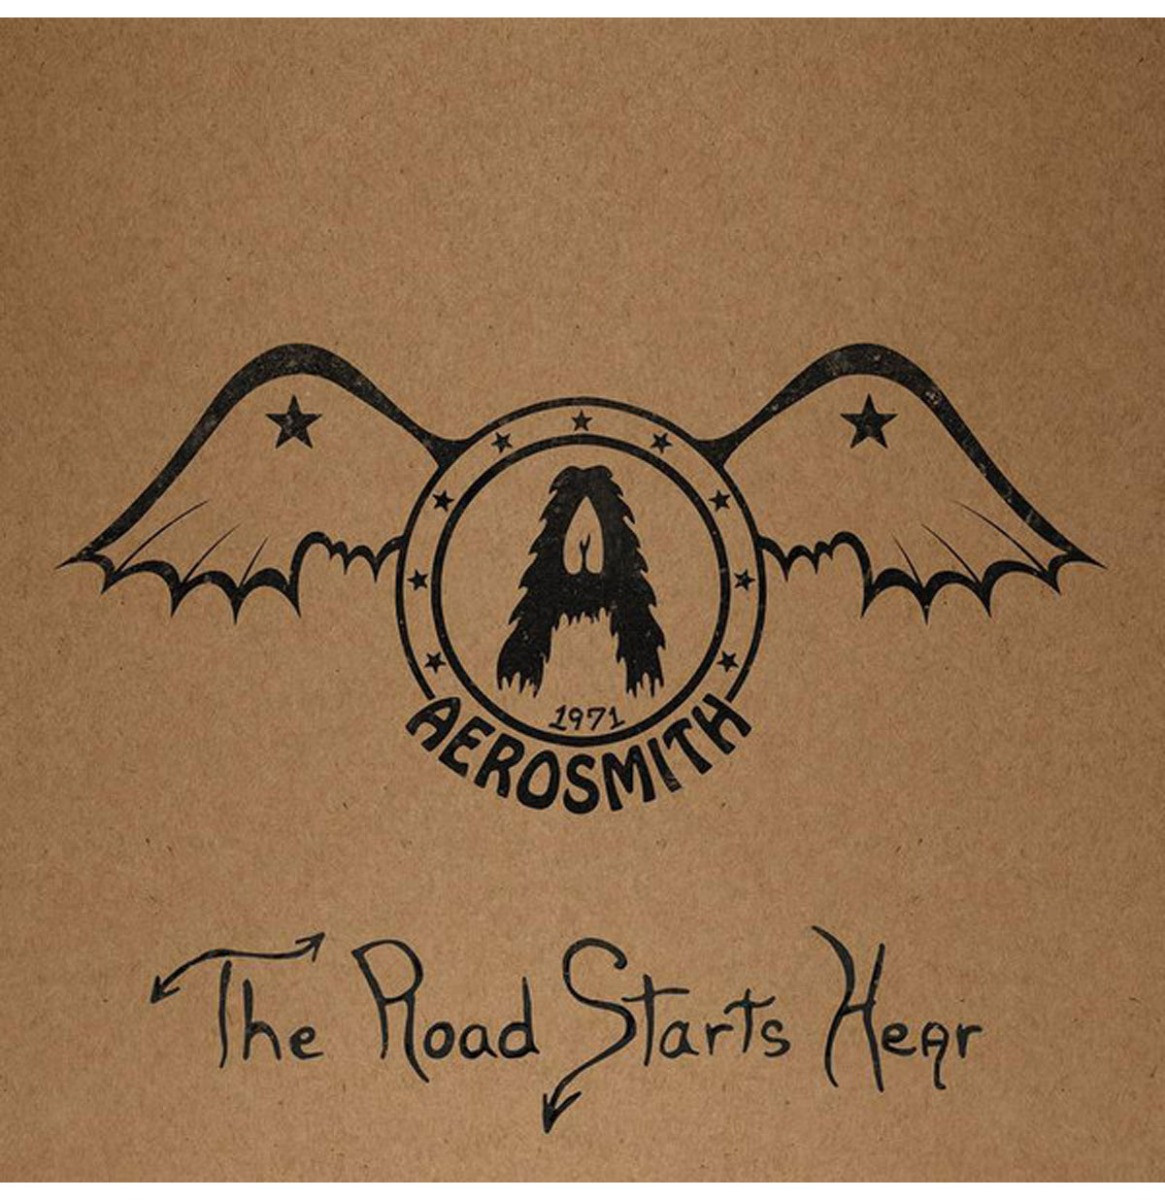 Aerosmith - The Road Starts Hear (Record Store Day Black Friday 2021) LP